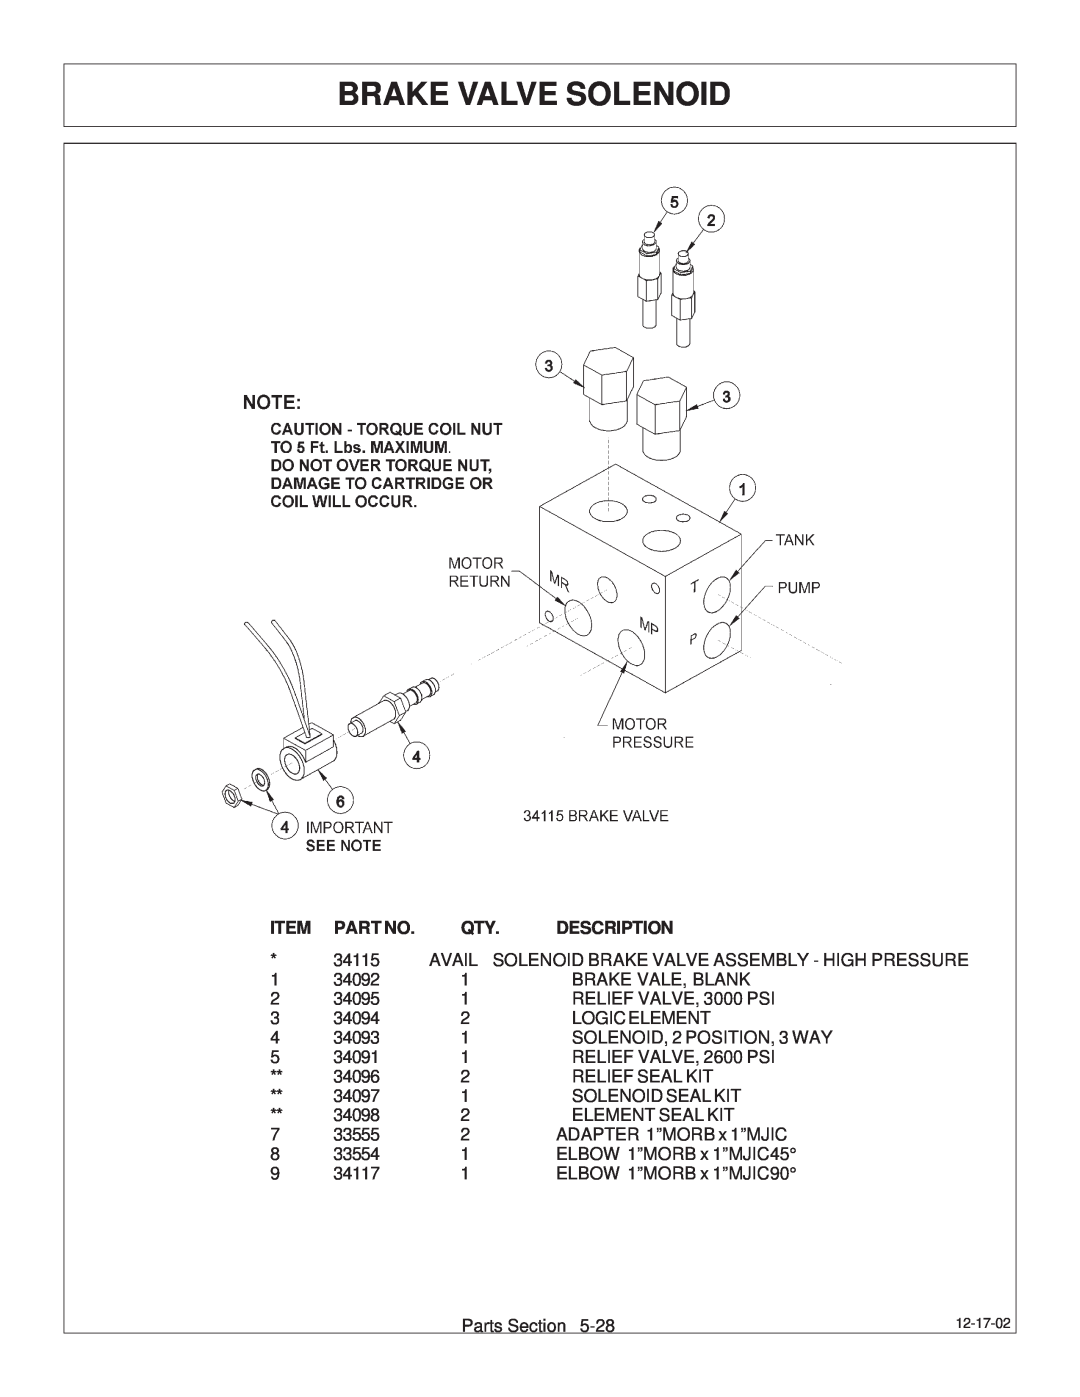 Tiger Products Co., Ltd 6020009 manual Brake Valve Solenoid, Description 